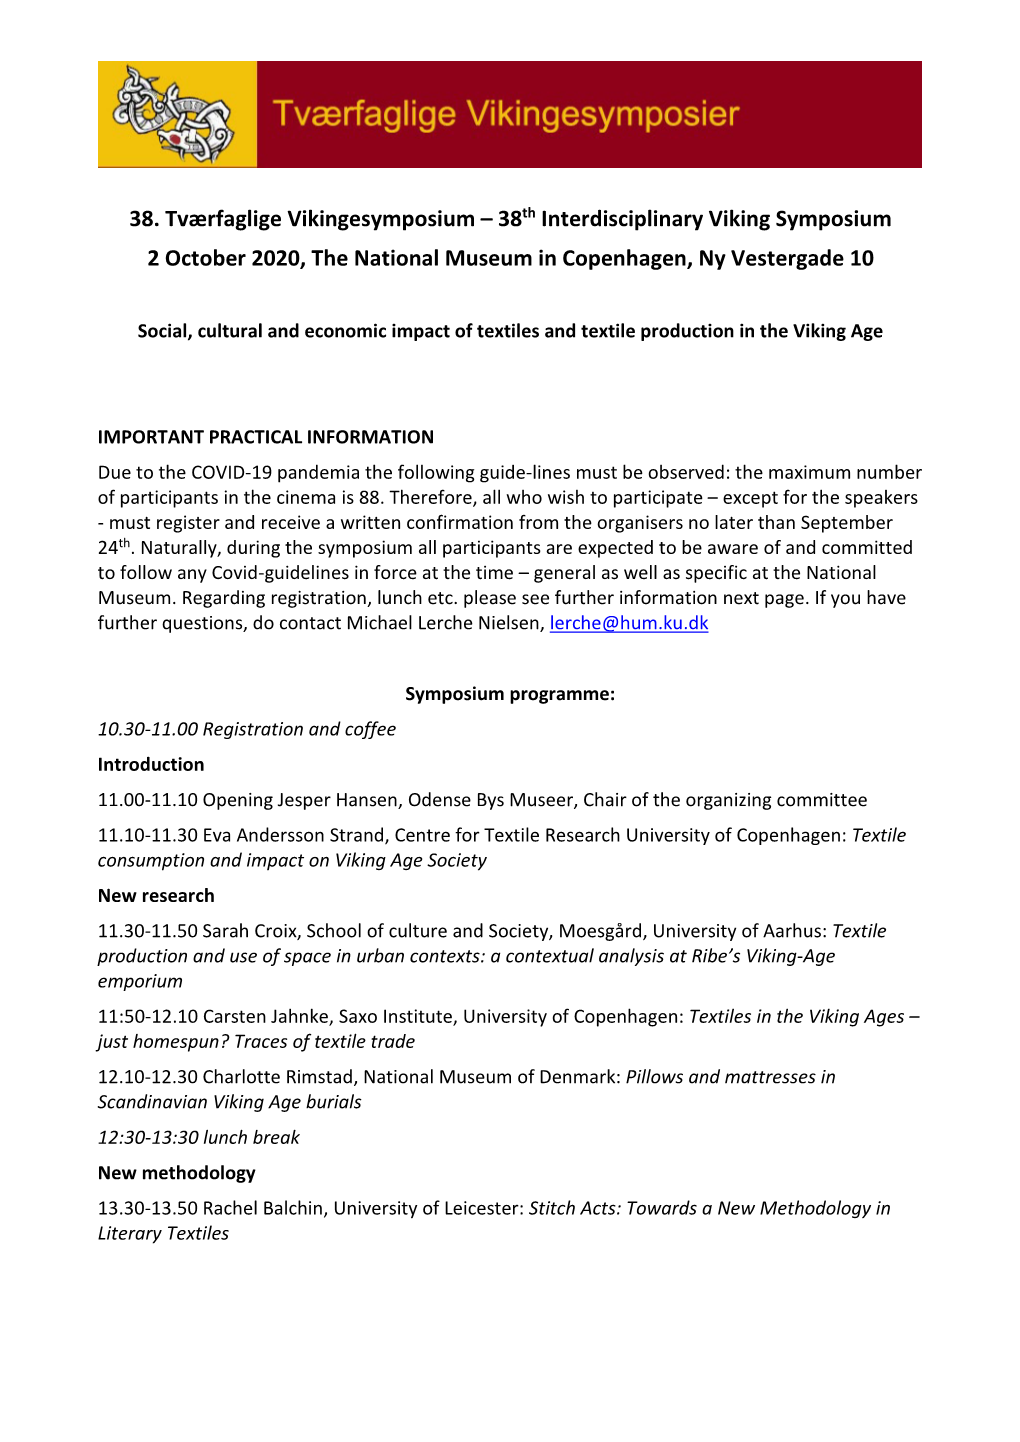 38Th Interdisciplinary Viking Symposium 2 October 2020, the National Museum in Copenhagen, Ny Vestergade 10